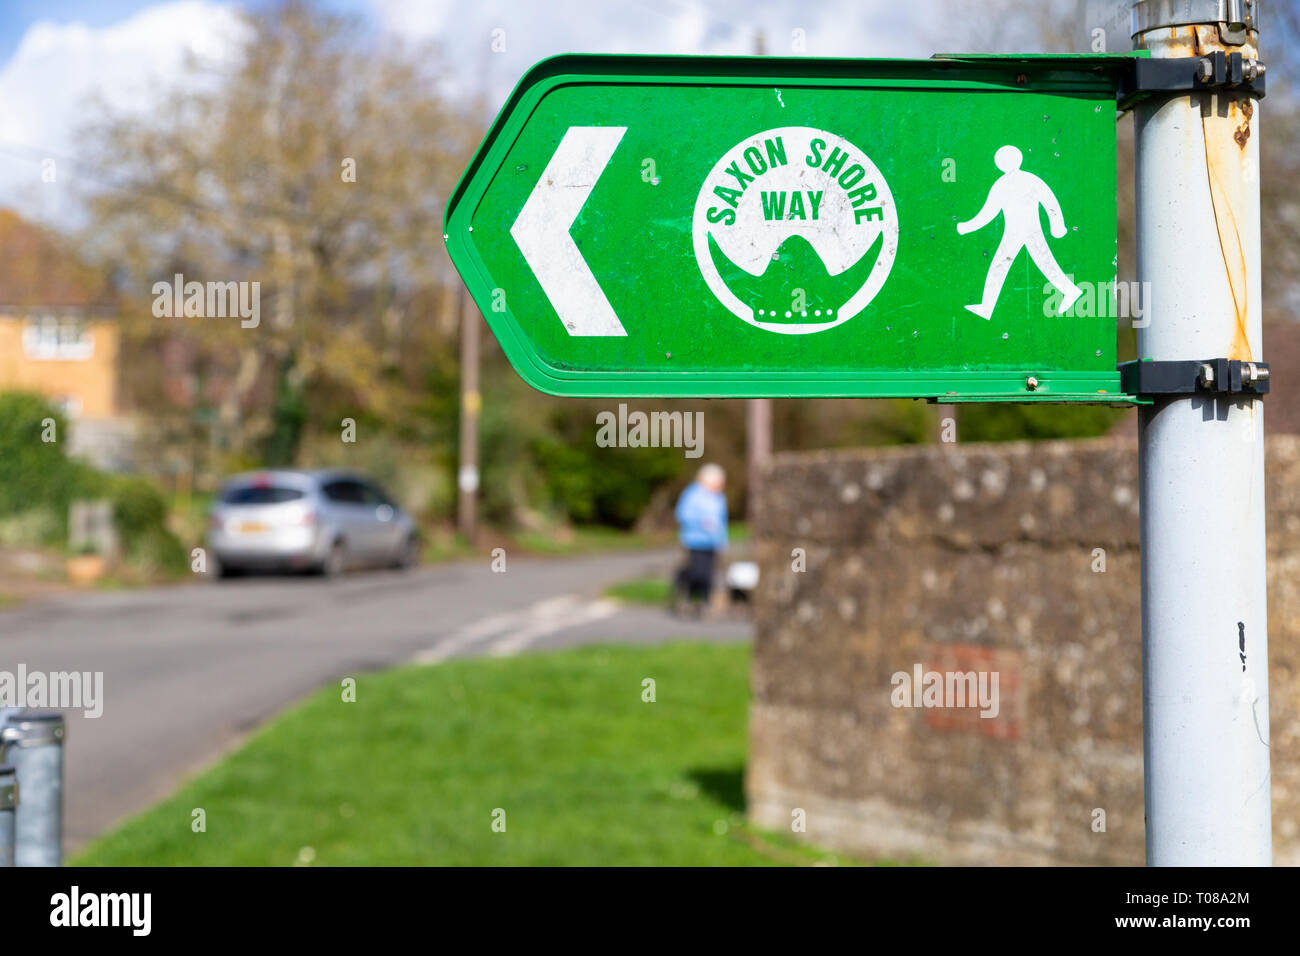 Fingerpost sign for Saxon shore way, hamstreet, ashford, kent, uk Stock Photo